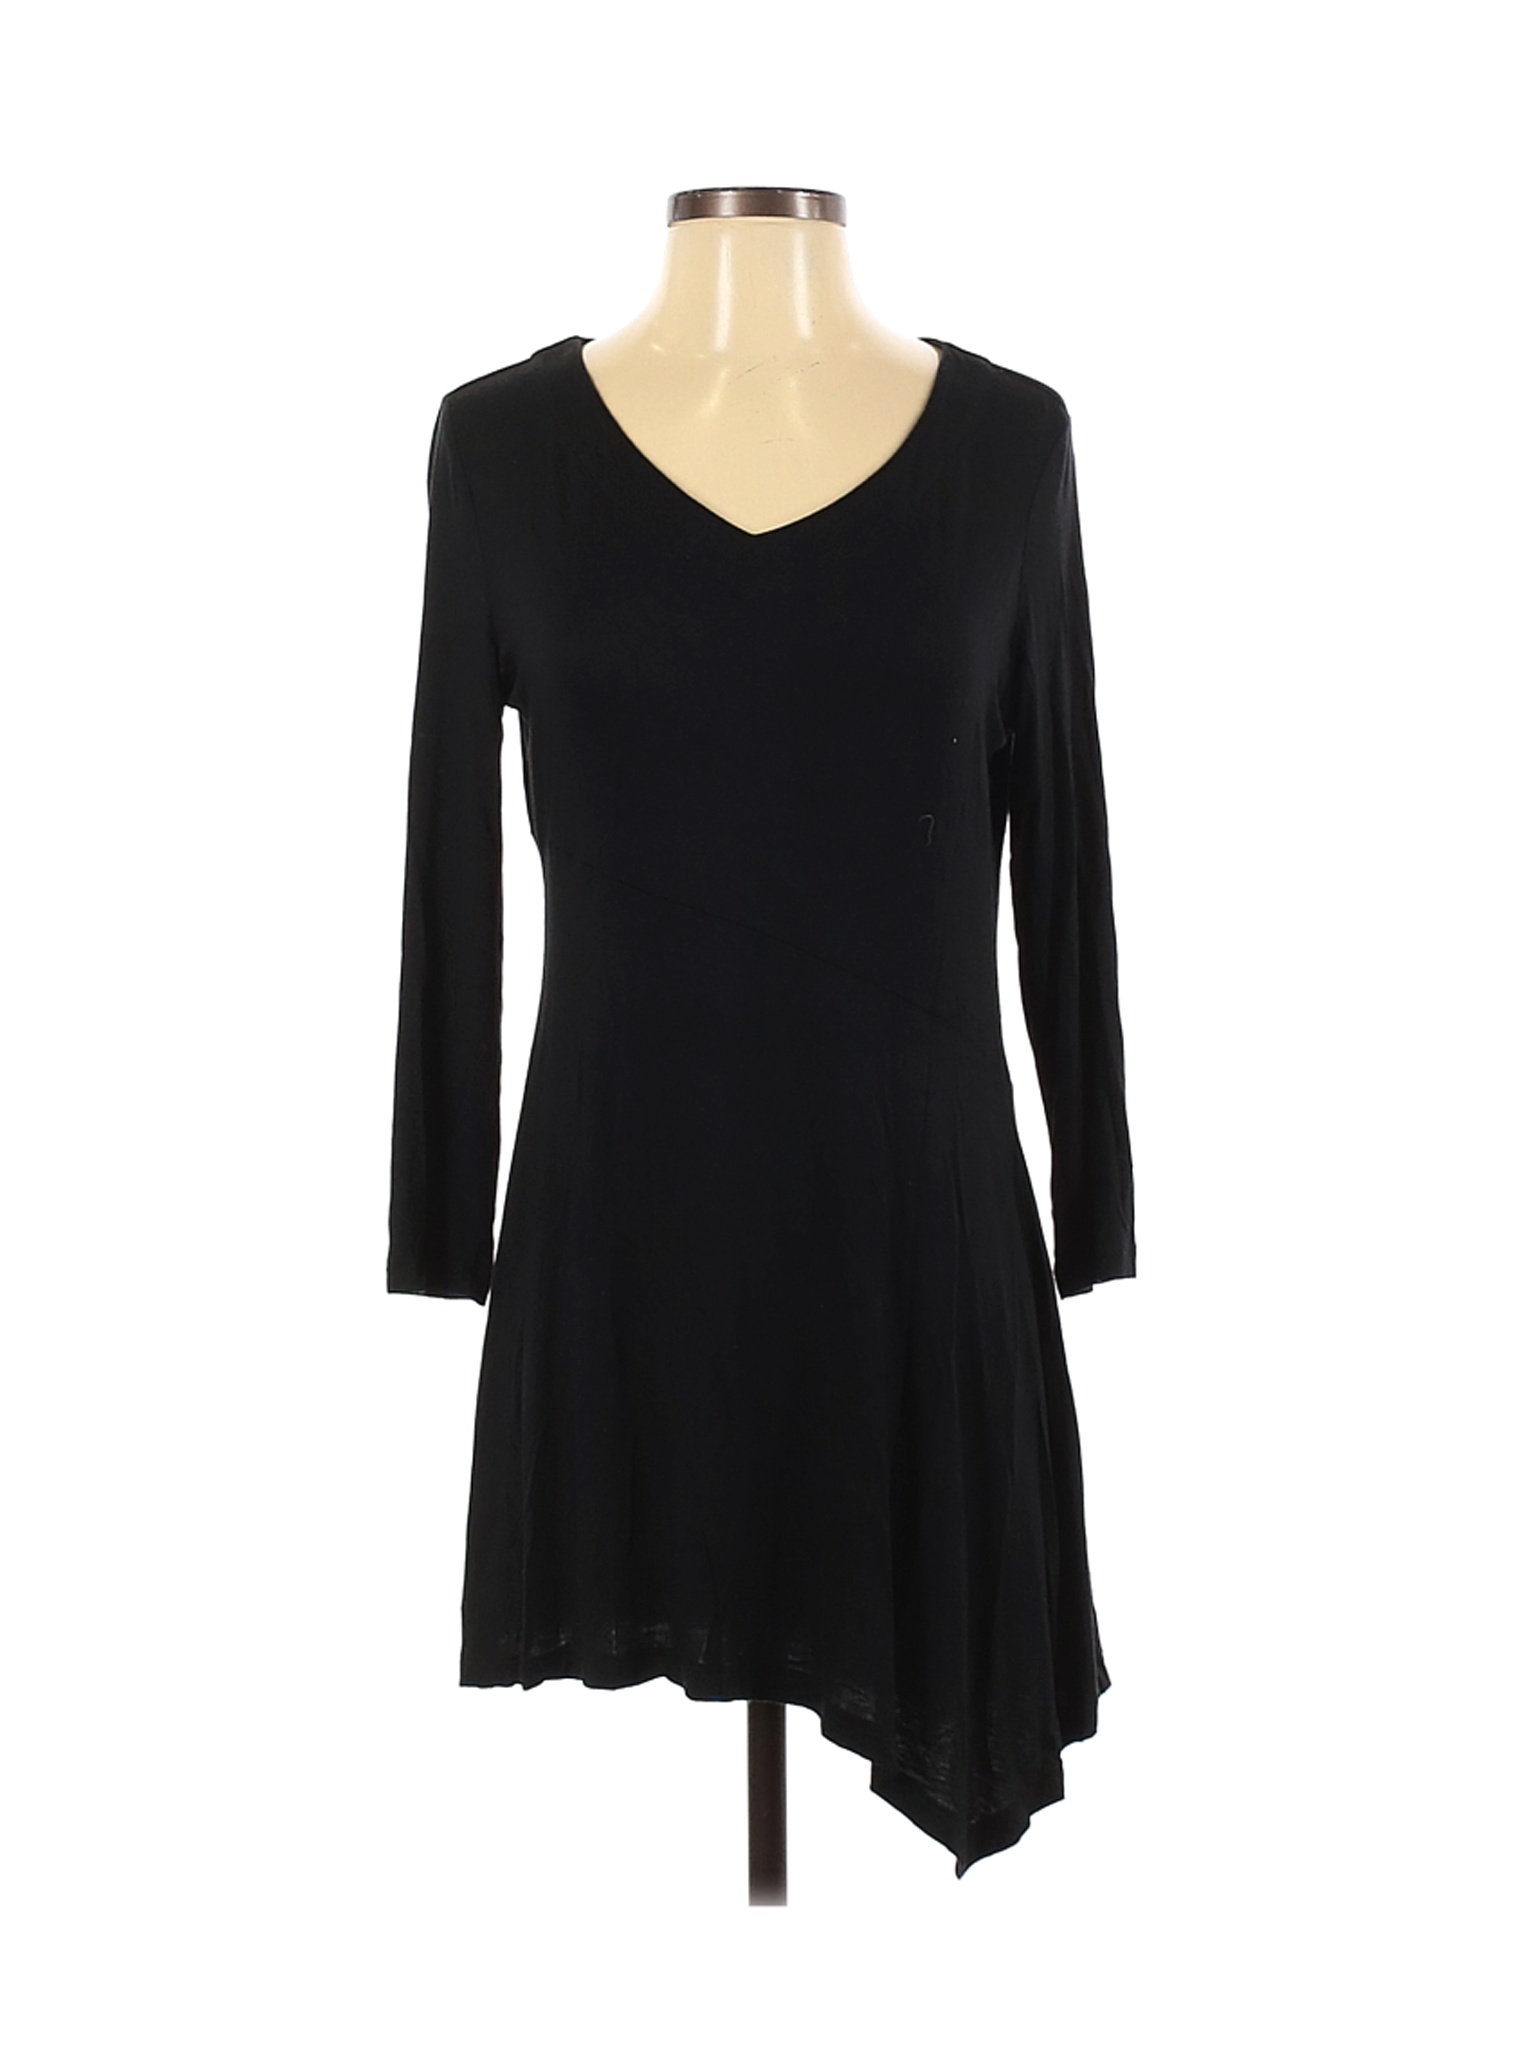 Soma Women Black Casual Dress S | eBay